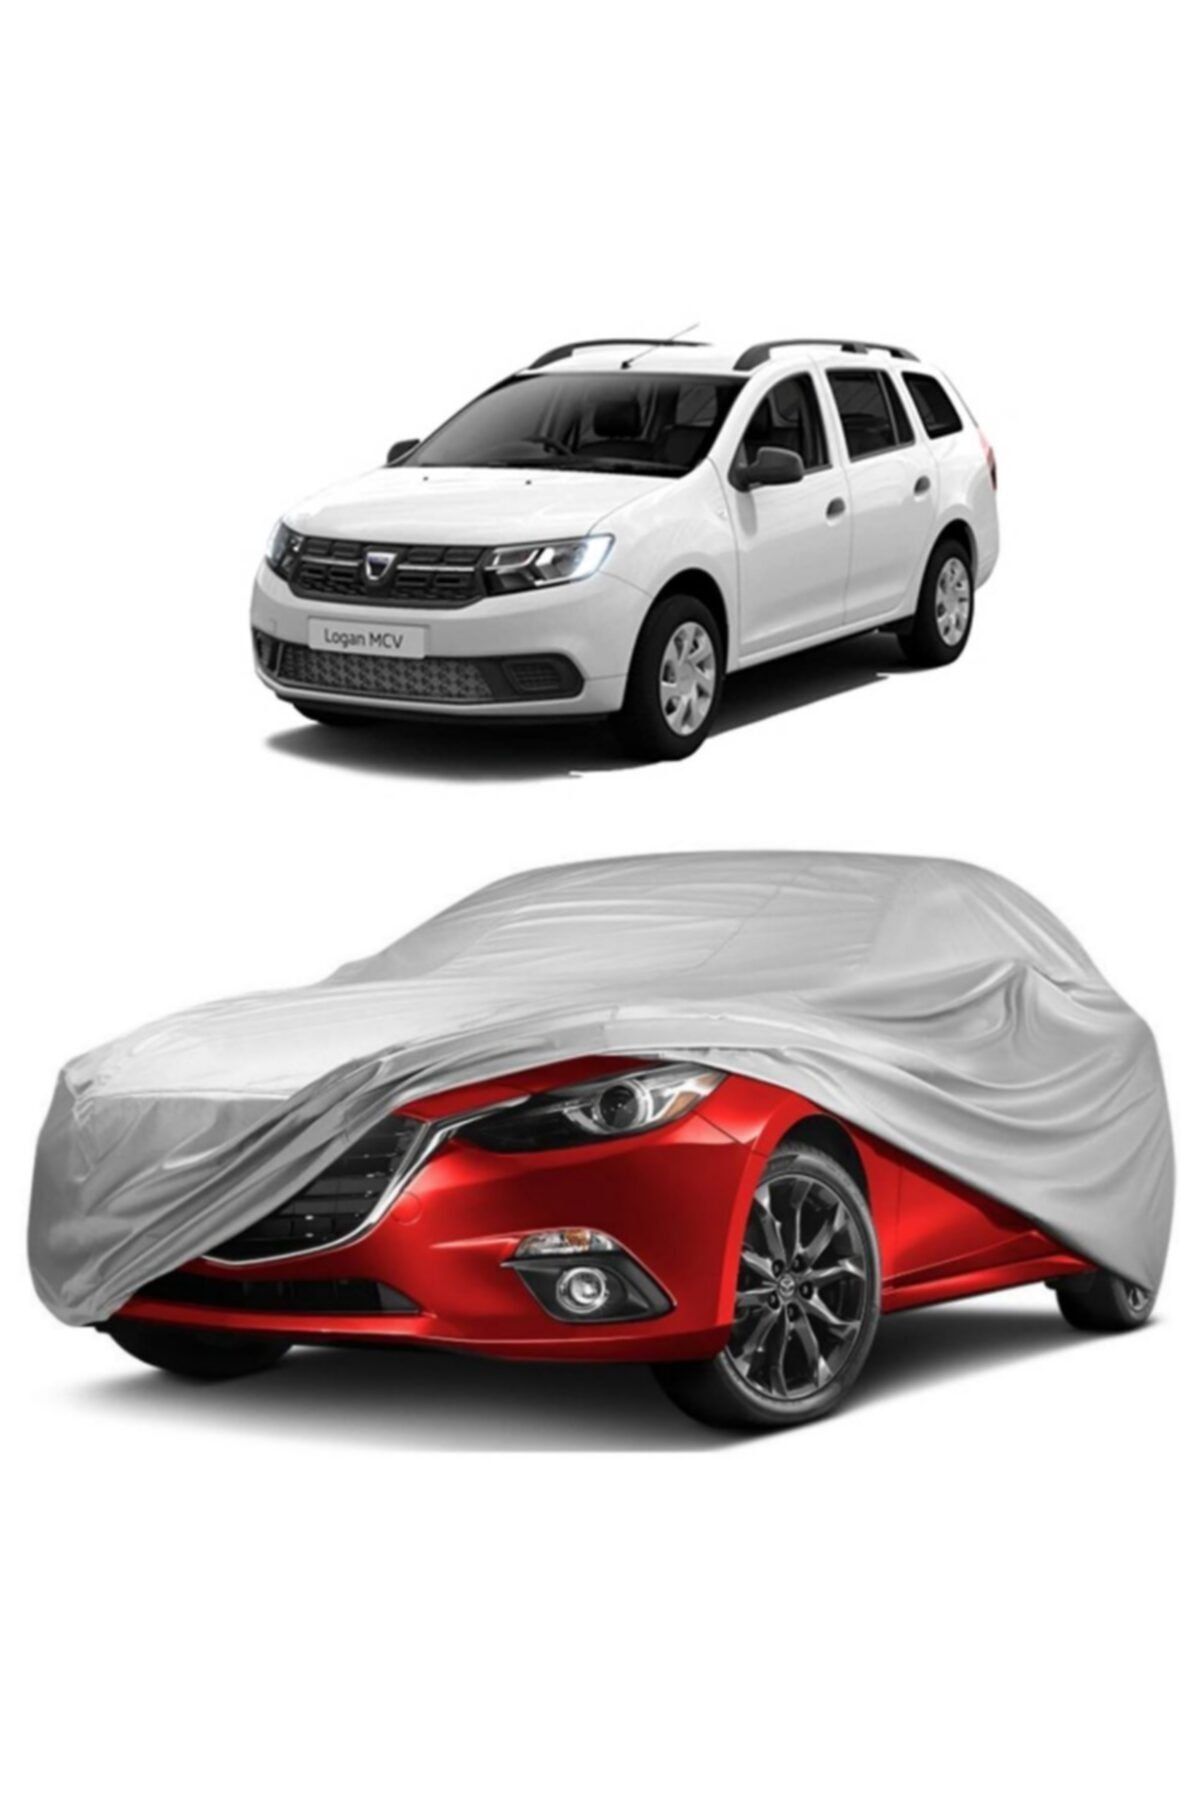 CoverPlus Dacia Logan Mcv Car Tarpaulin Miflon Canvas Auto Tent